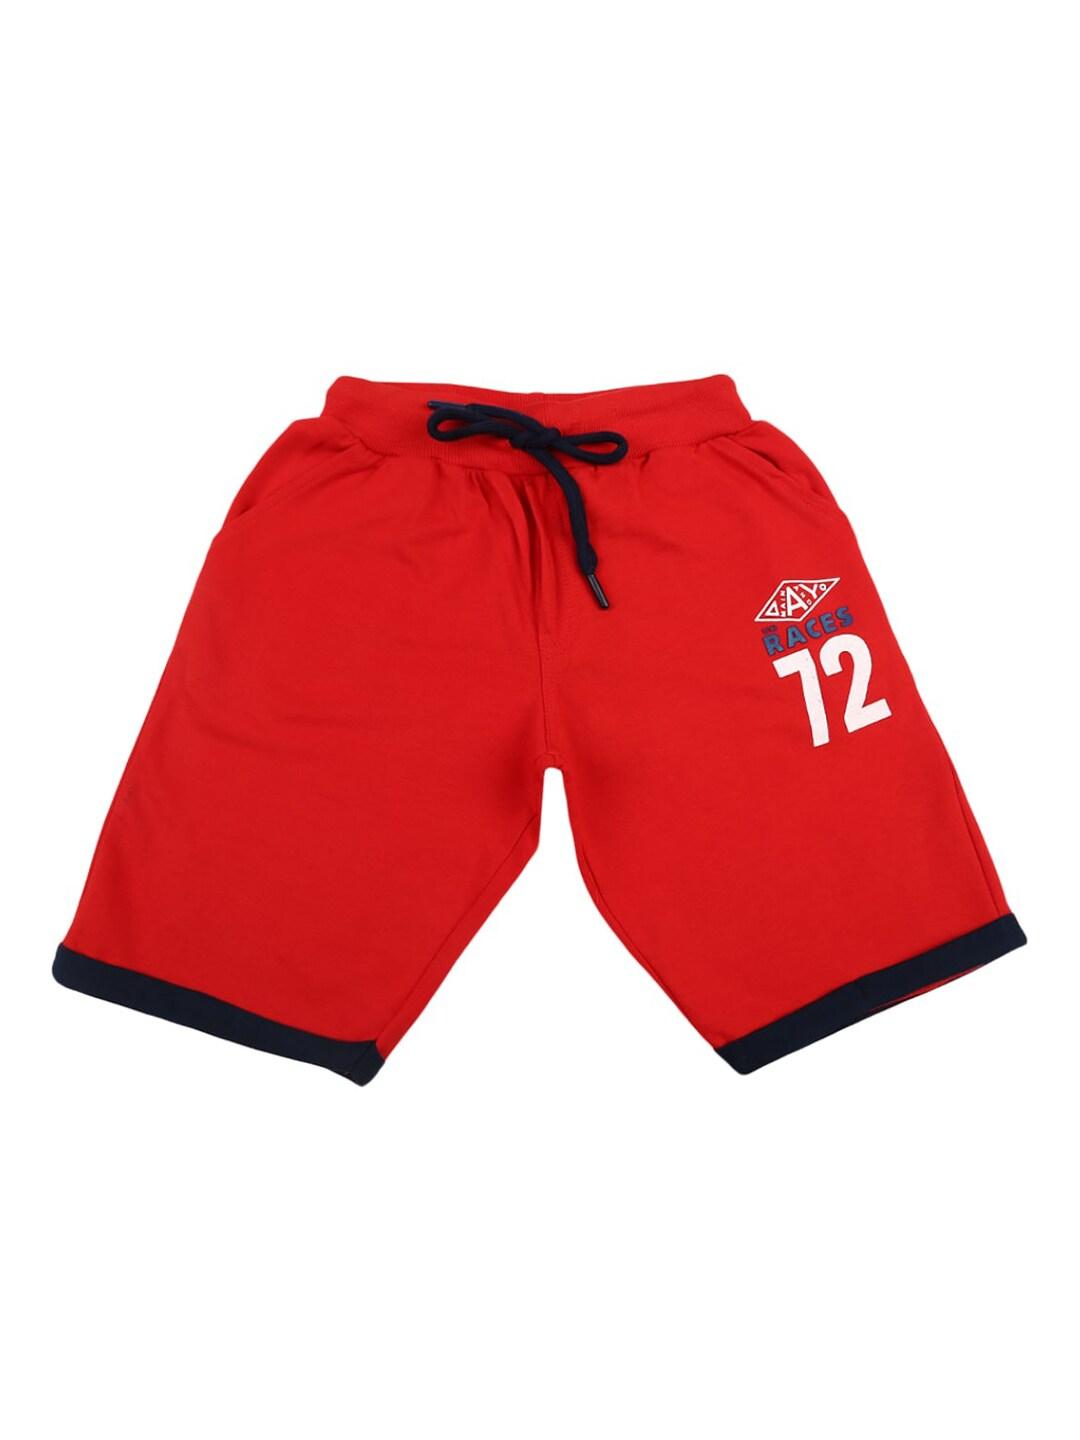 v-mart boys red shorts